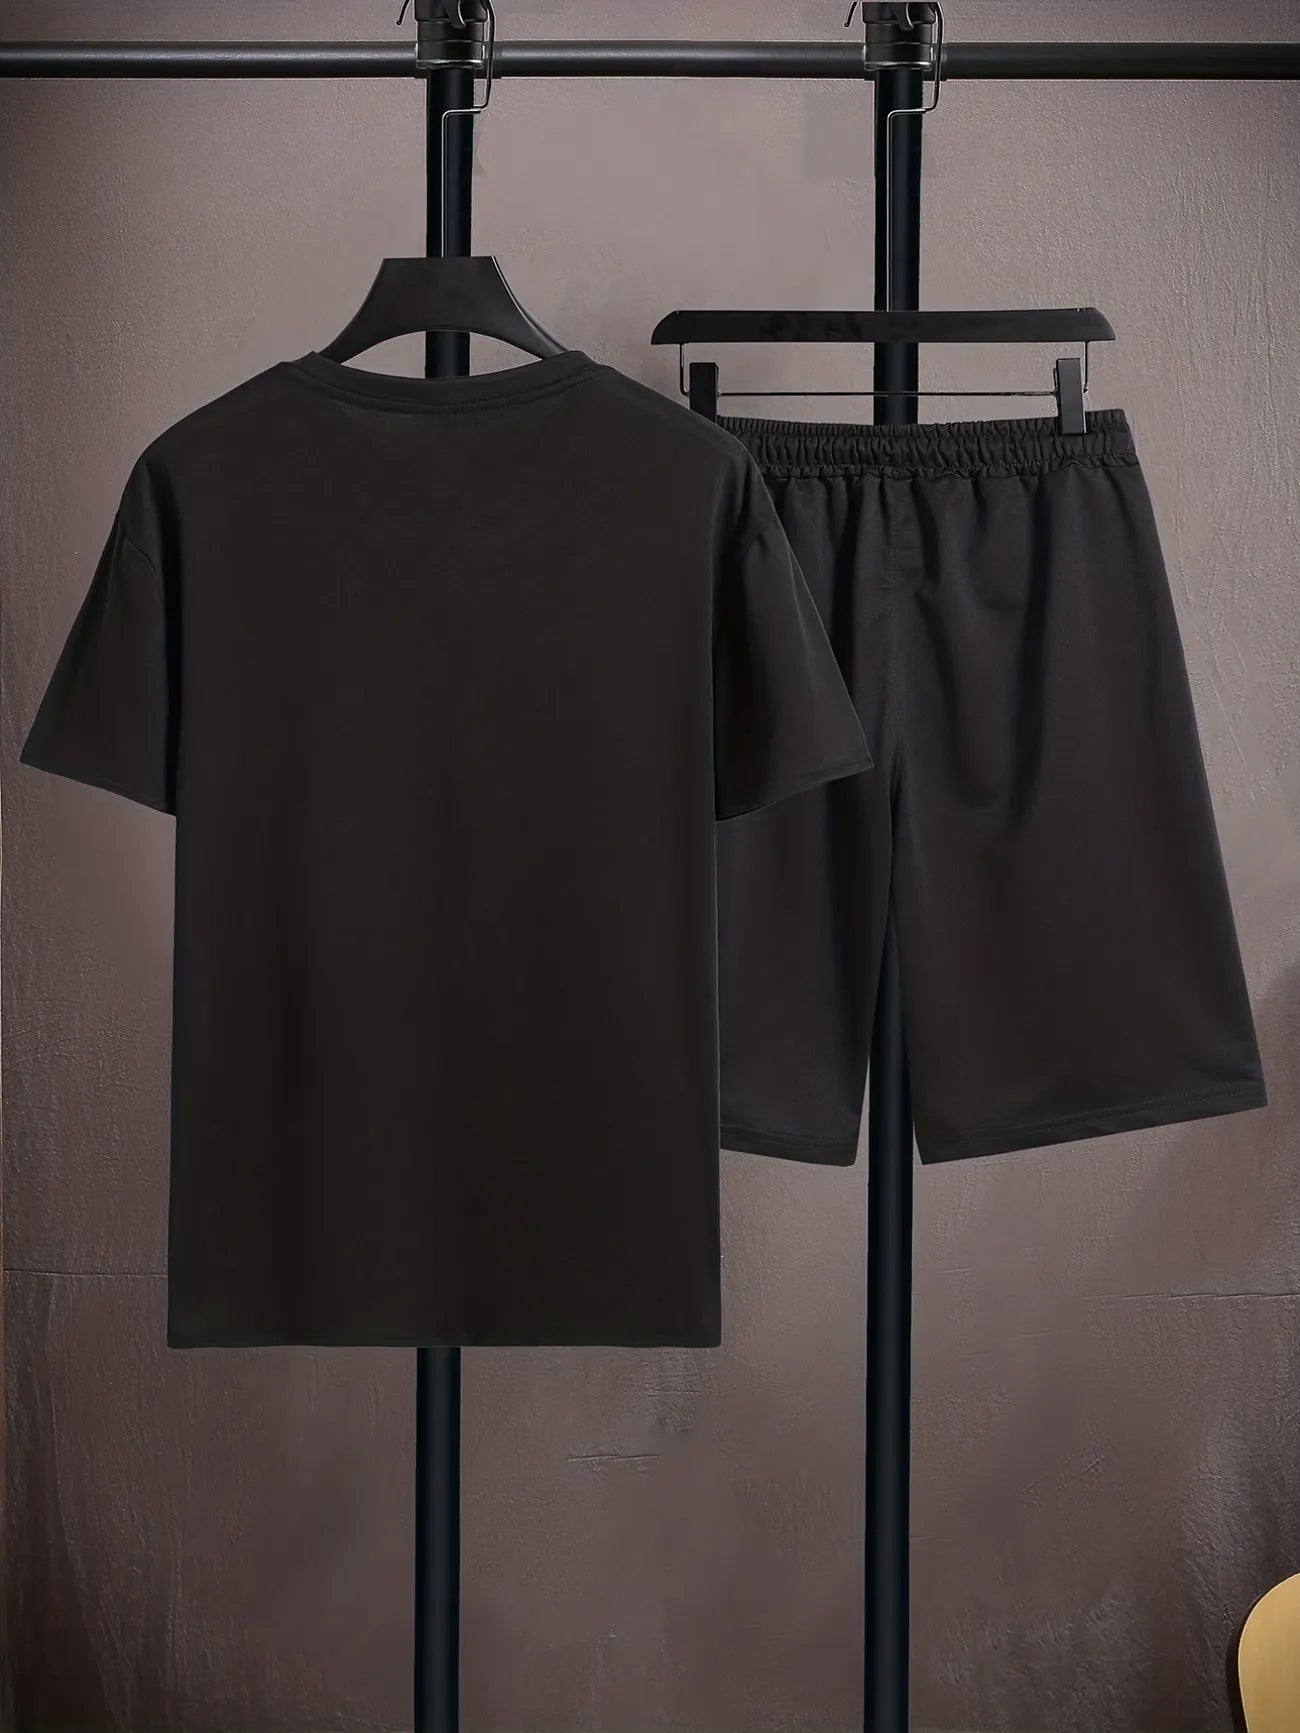 Mens Summer Shorts + T-Shirt Set - TTMSS161 - Black Black